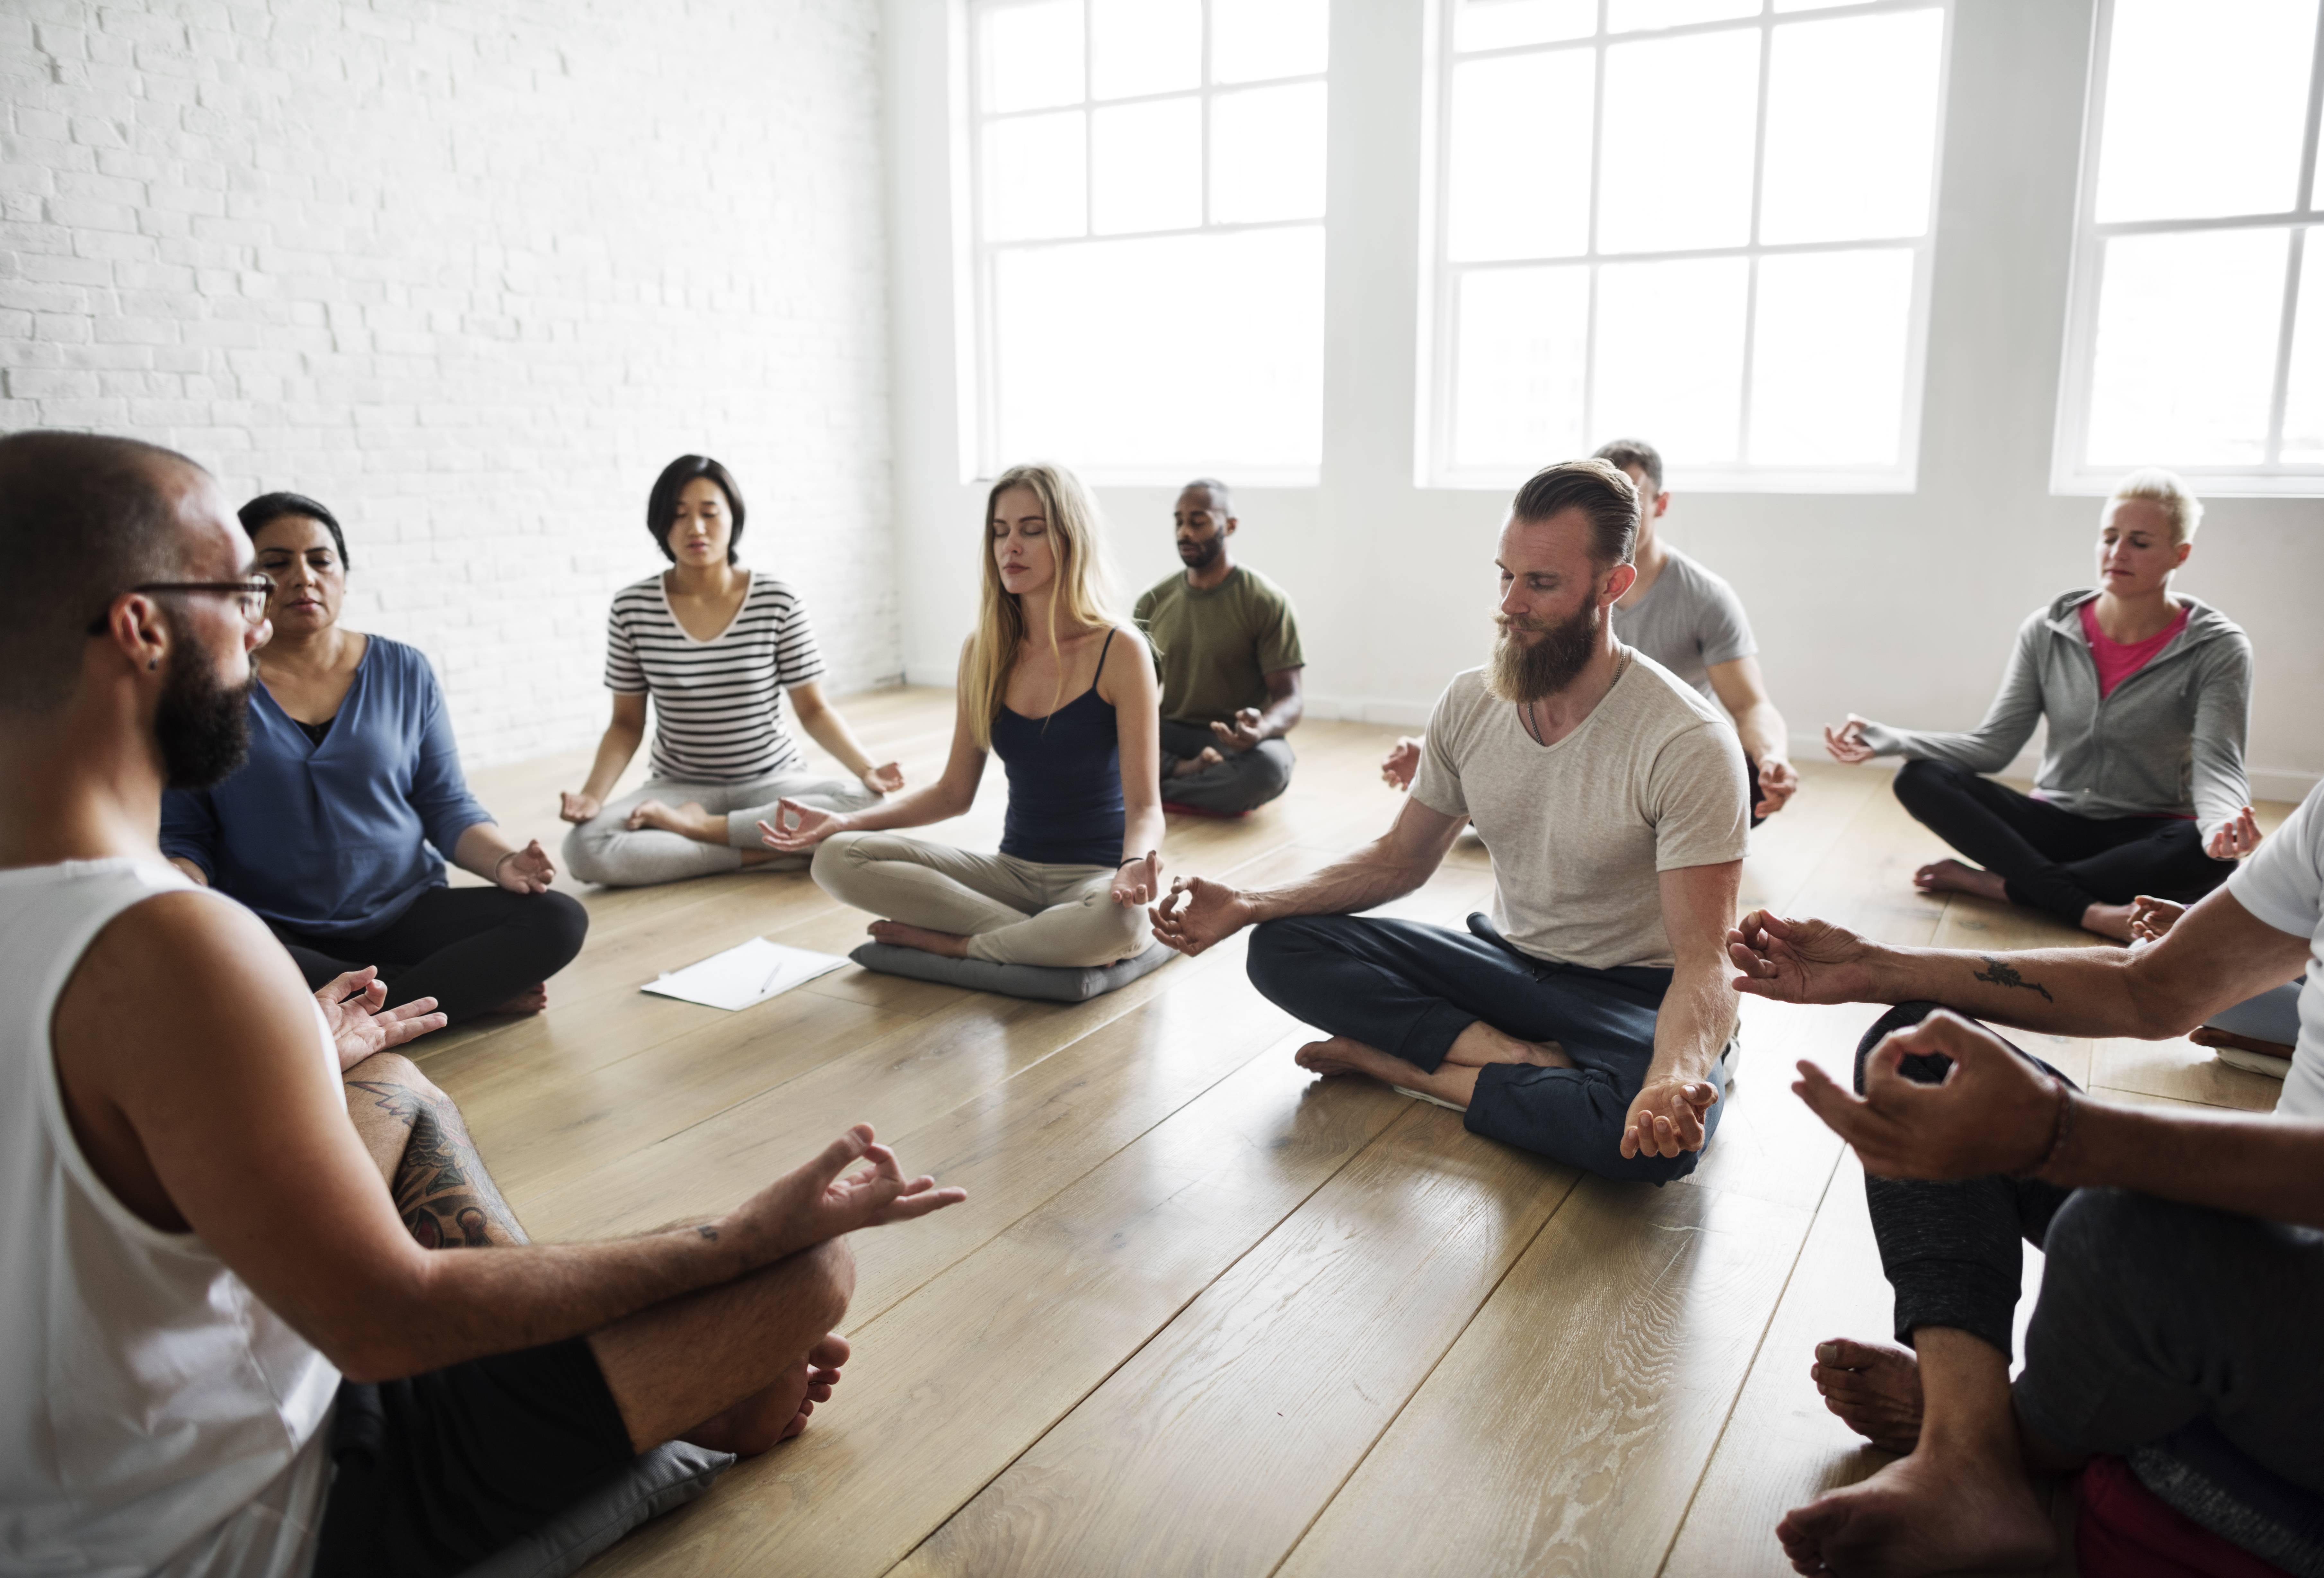 Guided meditation. Групповая медитация. Медитация группа людей. Группа людей медитируют. Коллективная медитация.